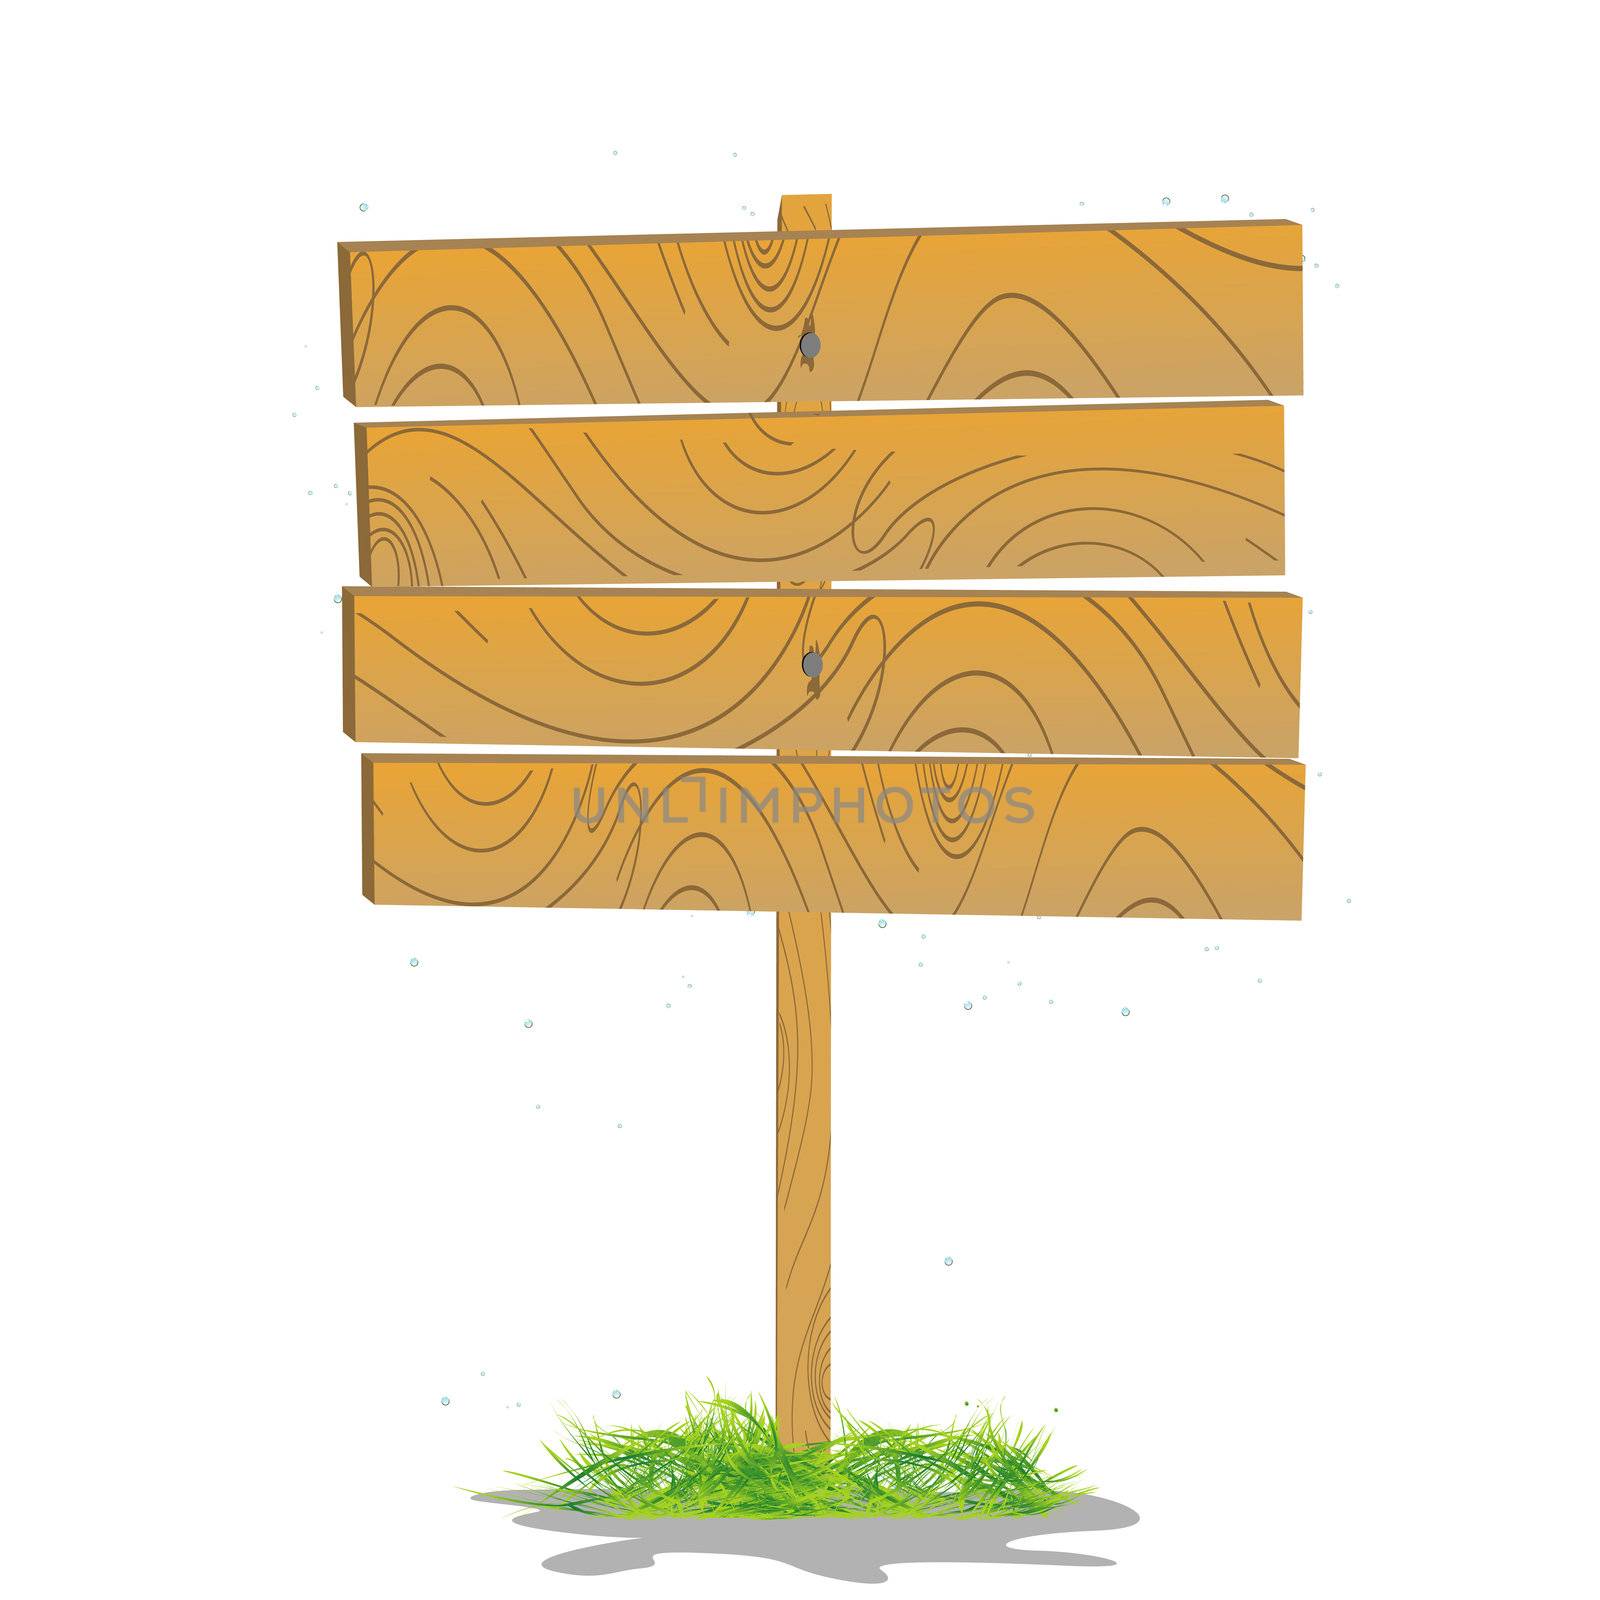 Stylized wooden board on a grass